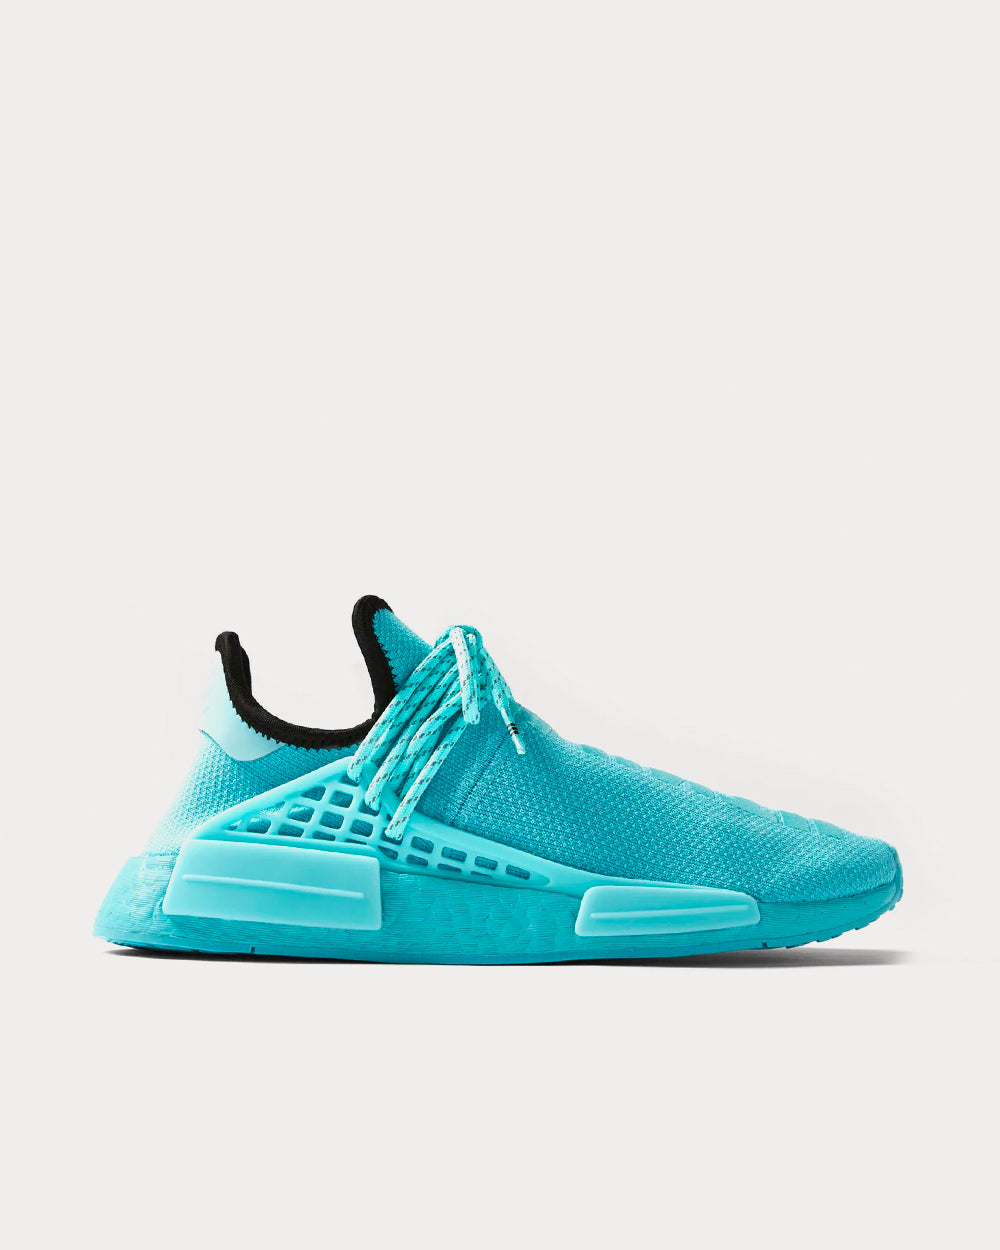 Adidas x Pharrell Williams HU NMD Clear Aqua / Light Aqua / Black Low Top  Sneakers - Sneak in Peace